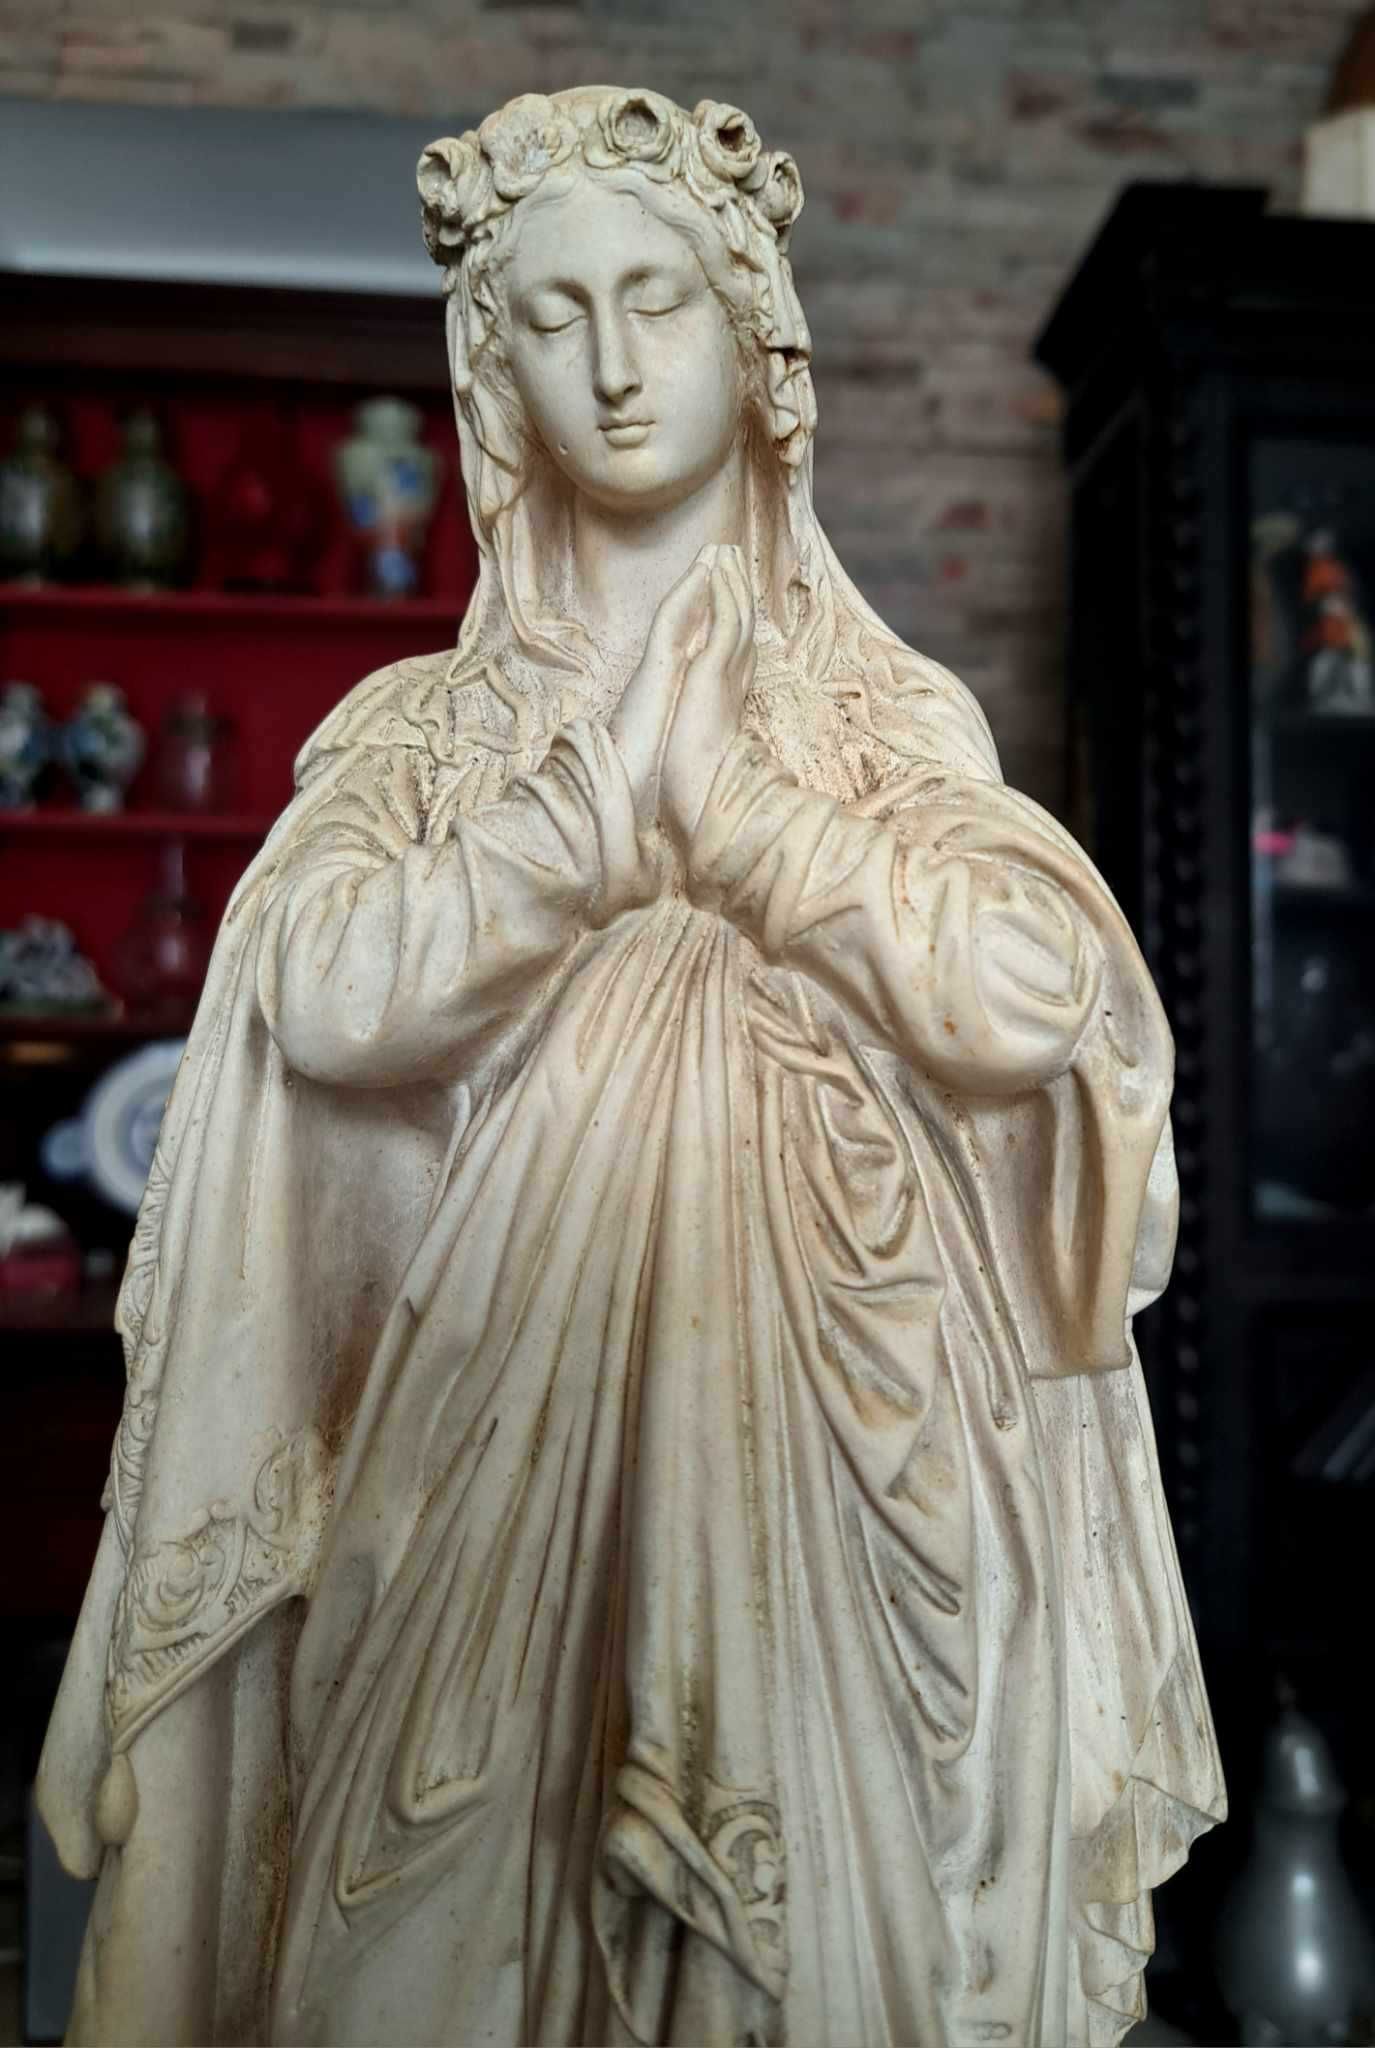 Virgem Maria arte sacra séc XIX assinada J. Cambos 1854